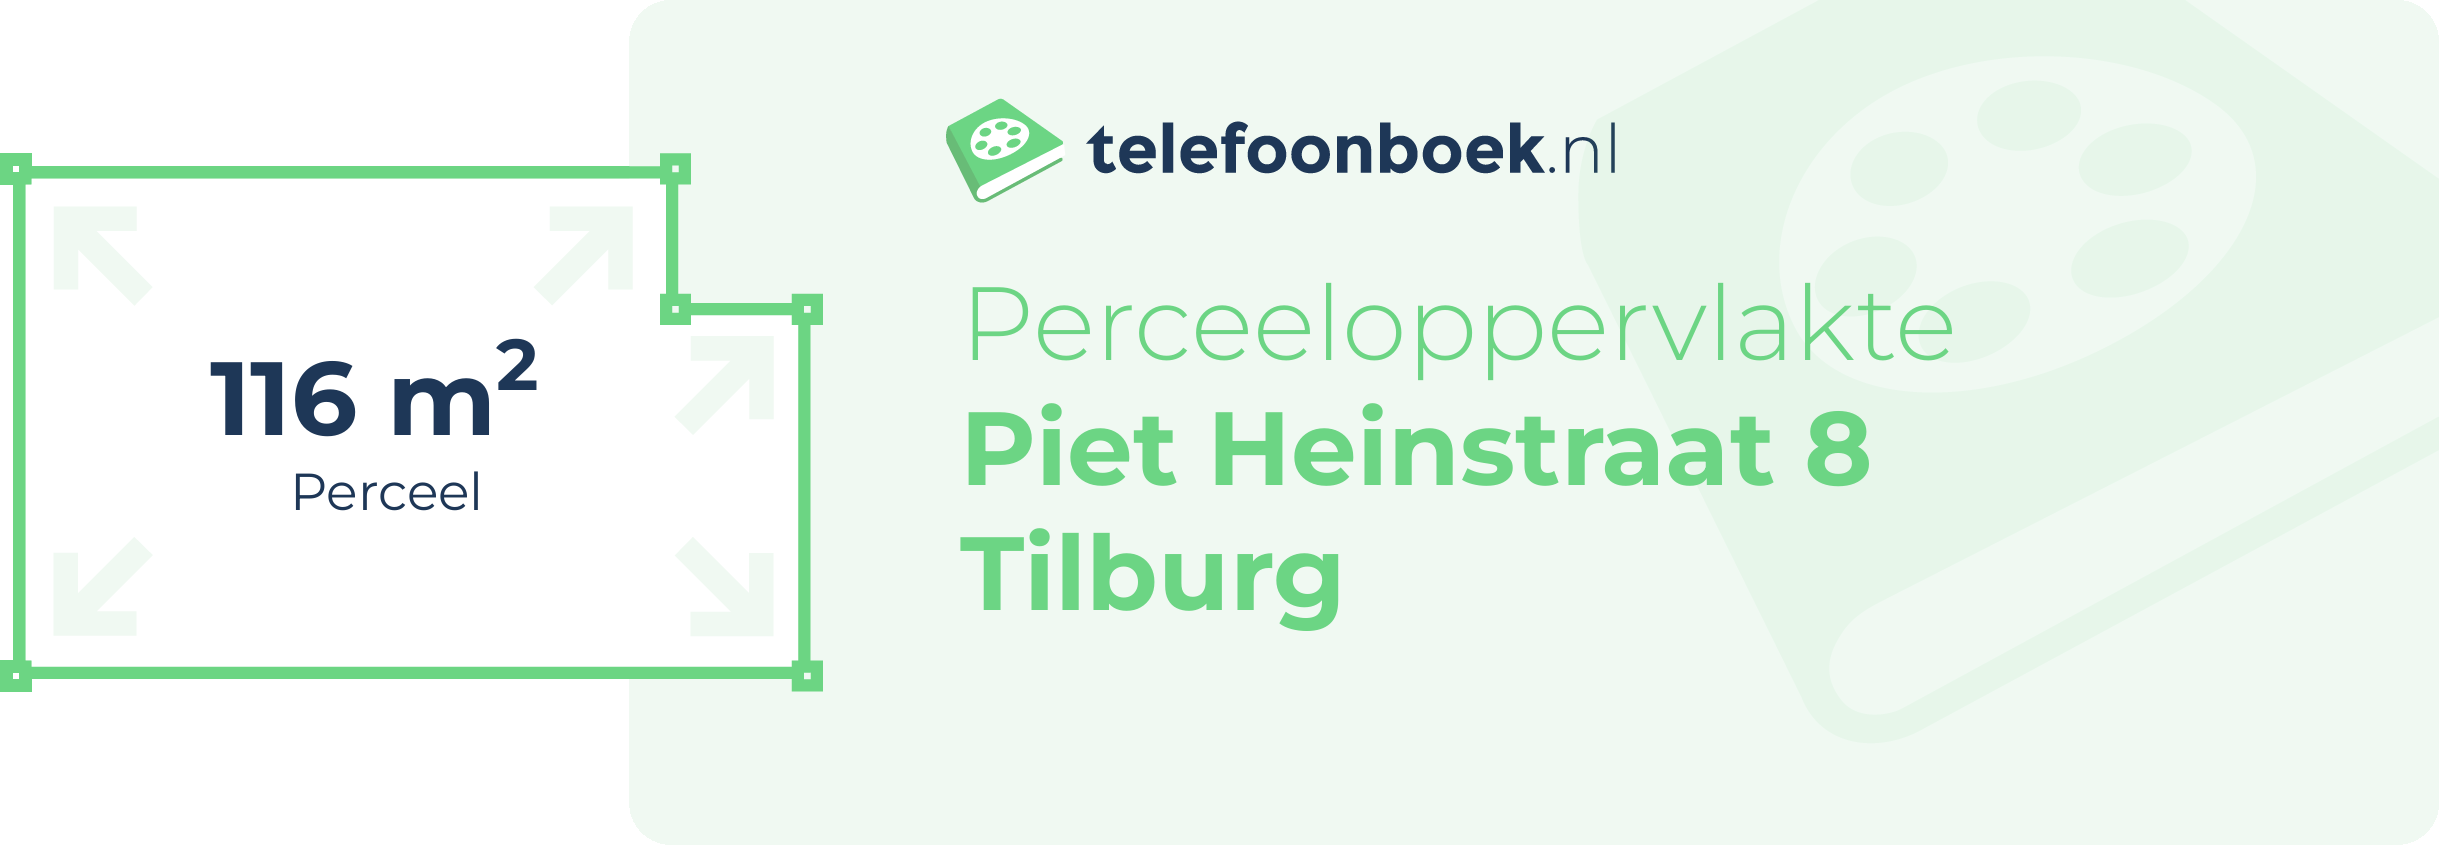 Perceeloppervlakte Piet Heinstraat 8 Tilburg